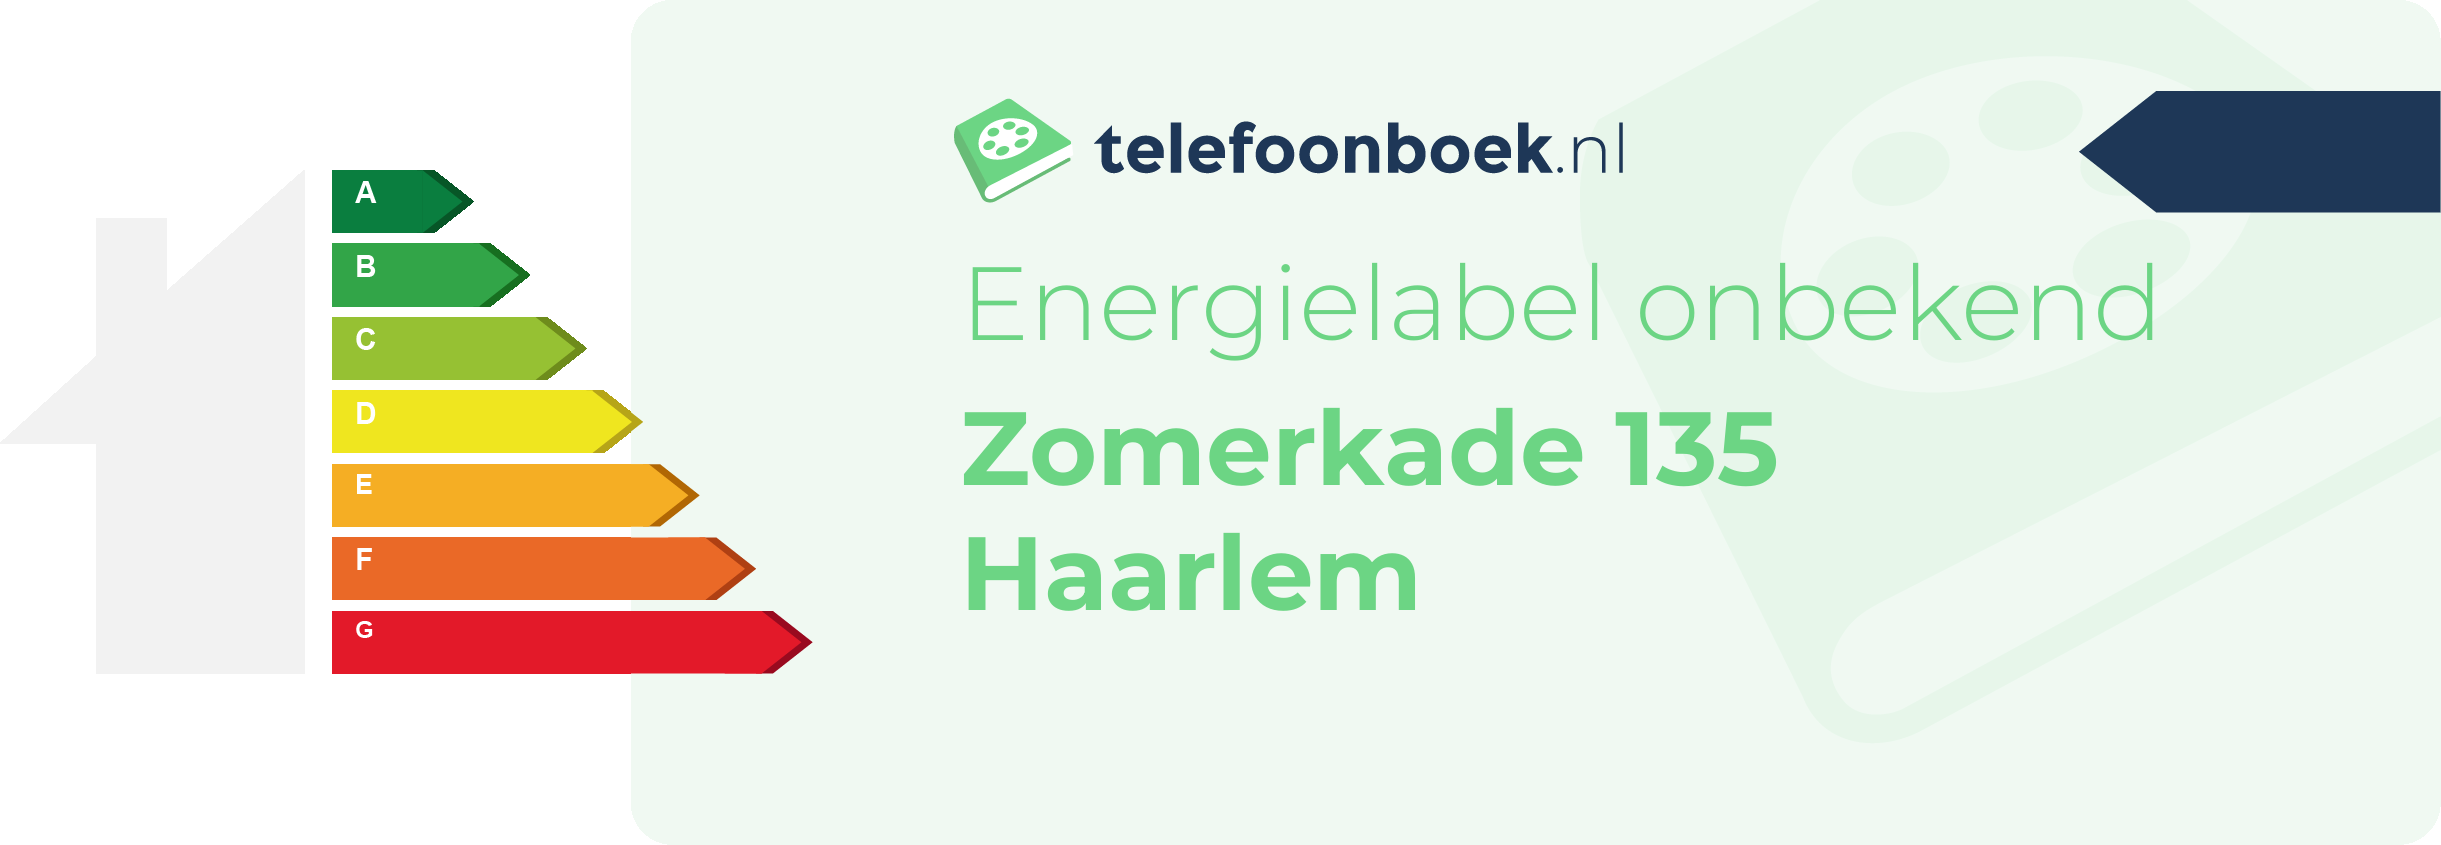 Energielabel Zomerkade 135 Haarlem